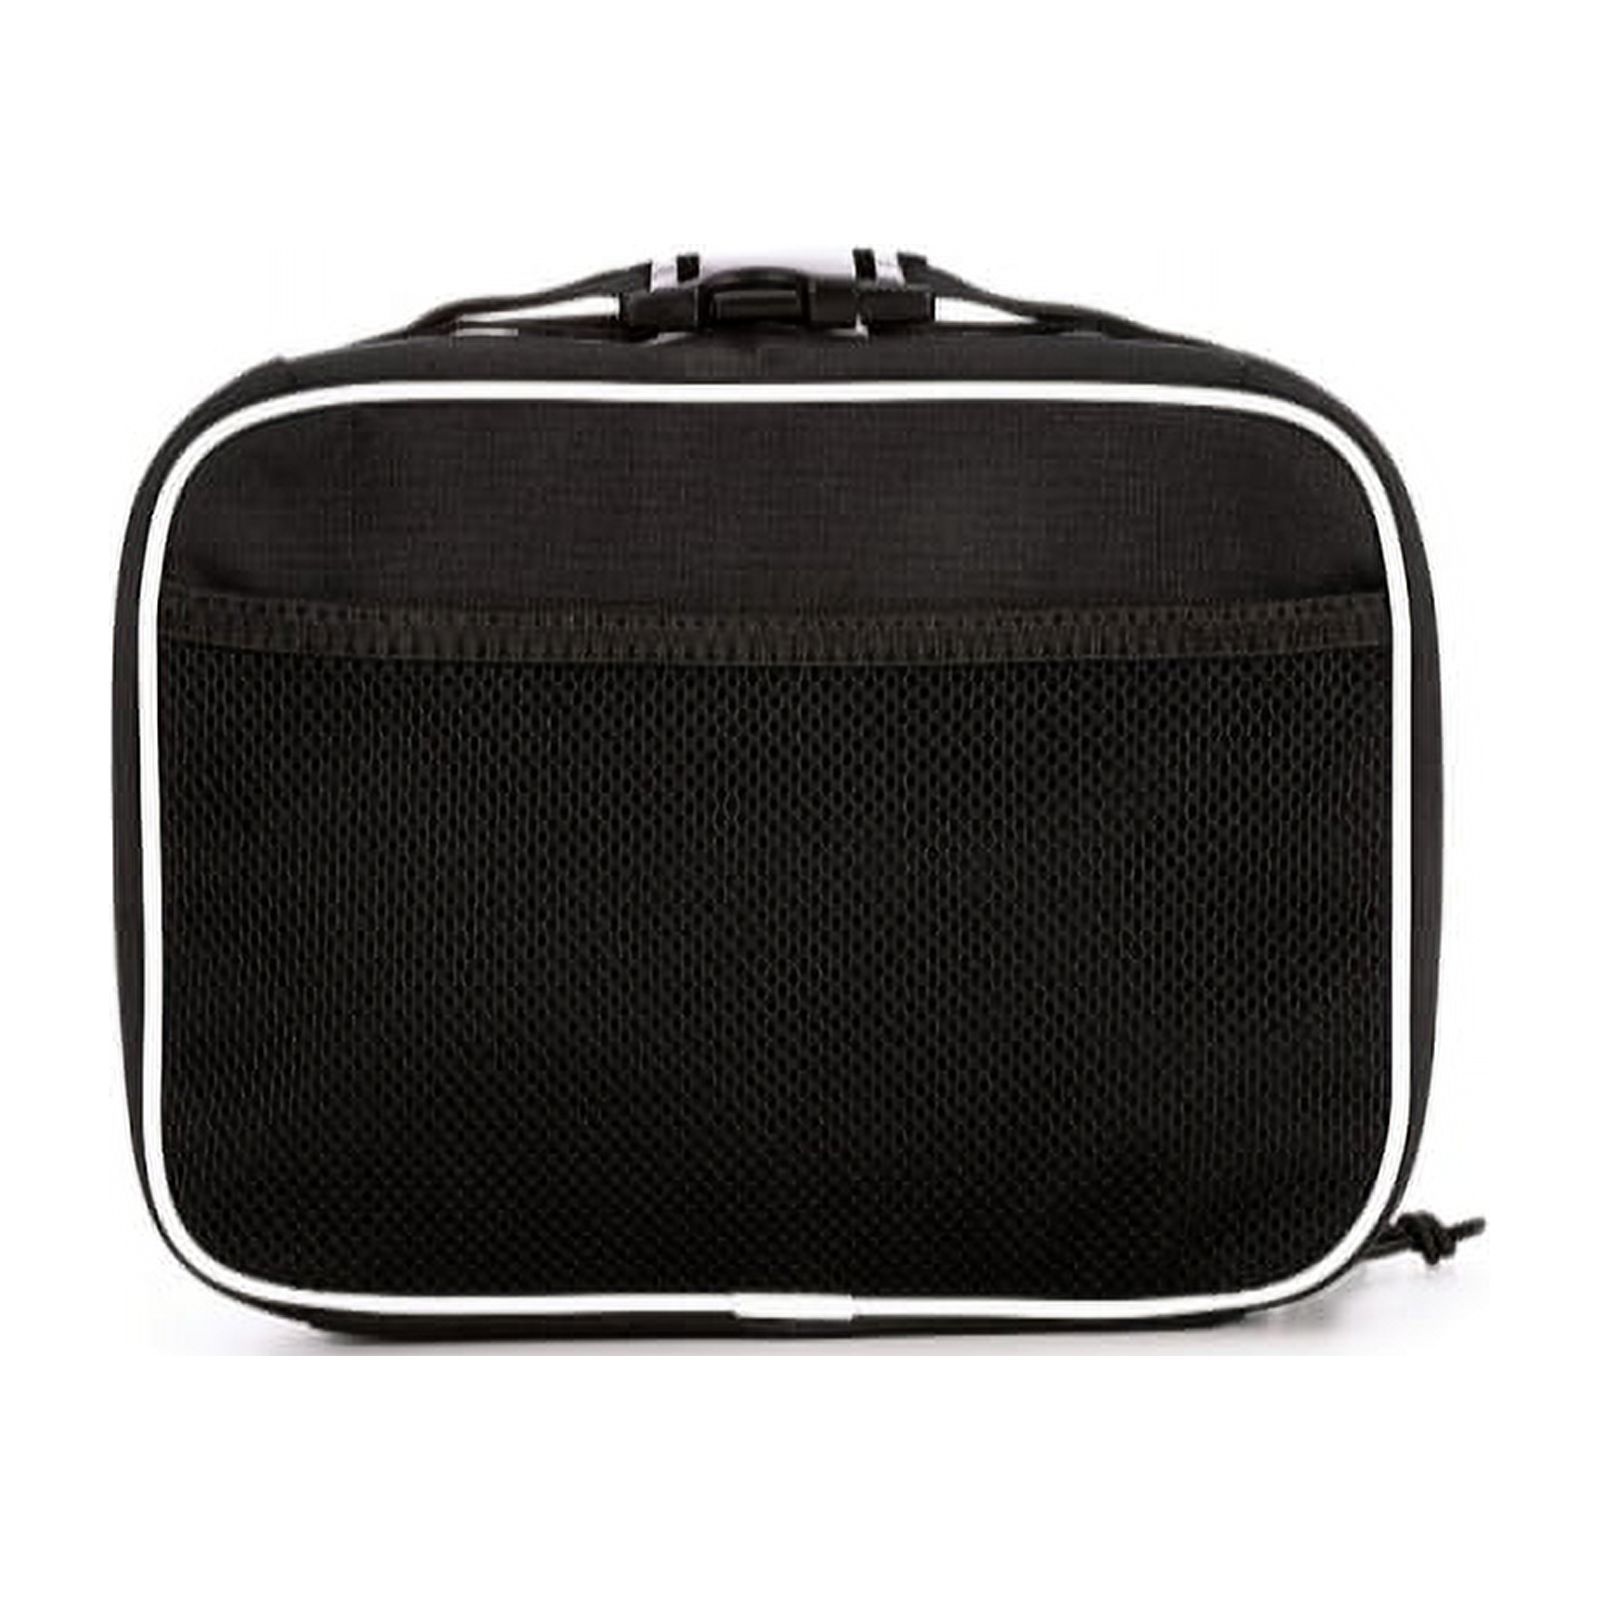 adidas Foundation Lunch Bag, Black/White, One Size - image 3 of 5